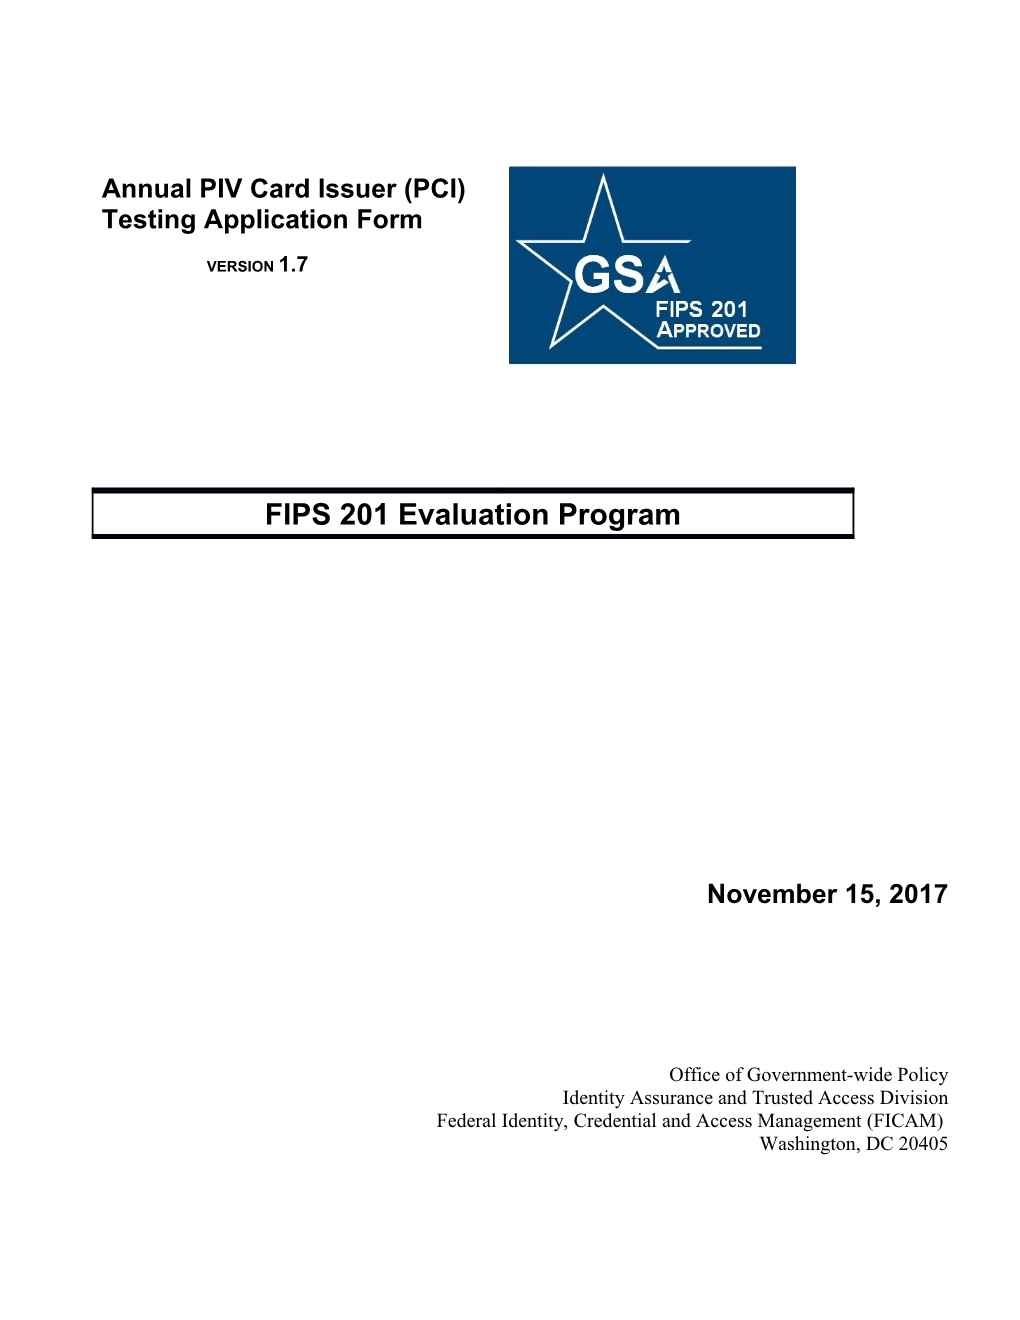 Annual PIV/PIV-I Card Issuer (PCI) Testing Application Form V.1.7